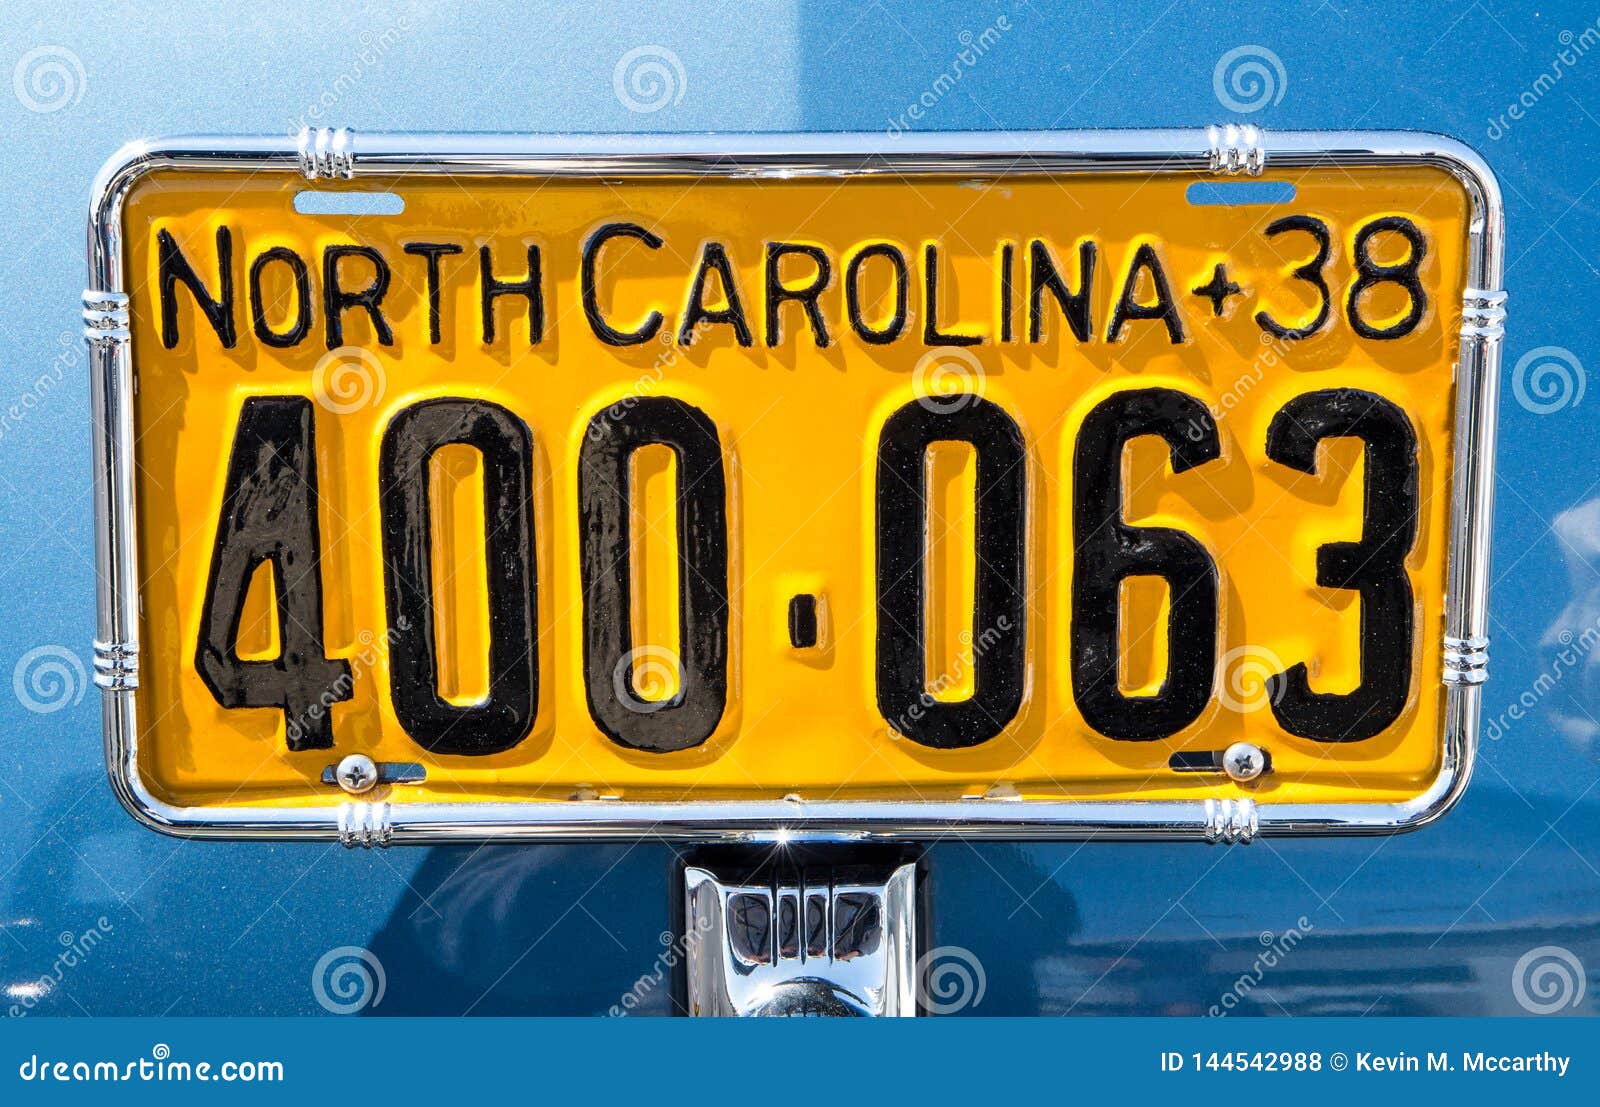 Vintage North Carolina Auto License Plate Editorial Stock Photo Image Of Vintage Automobile 144542988